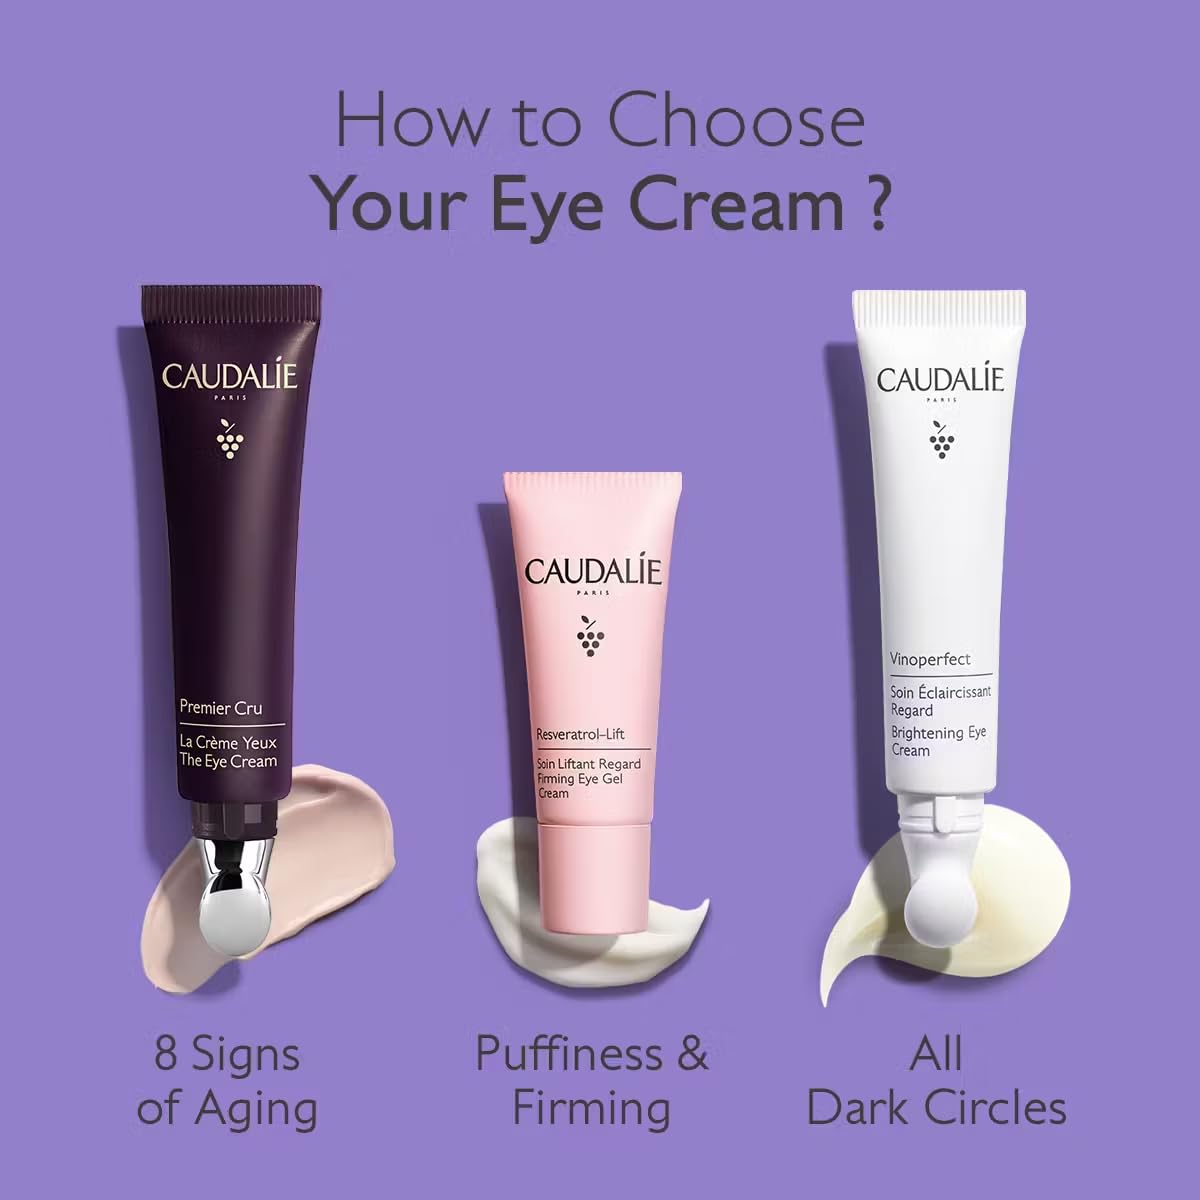 Vinoperfect Dark Circle Brightening Eye Cream with Niacinamide : Beauty & Personal Care